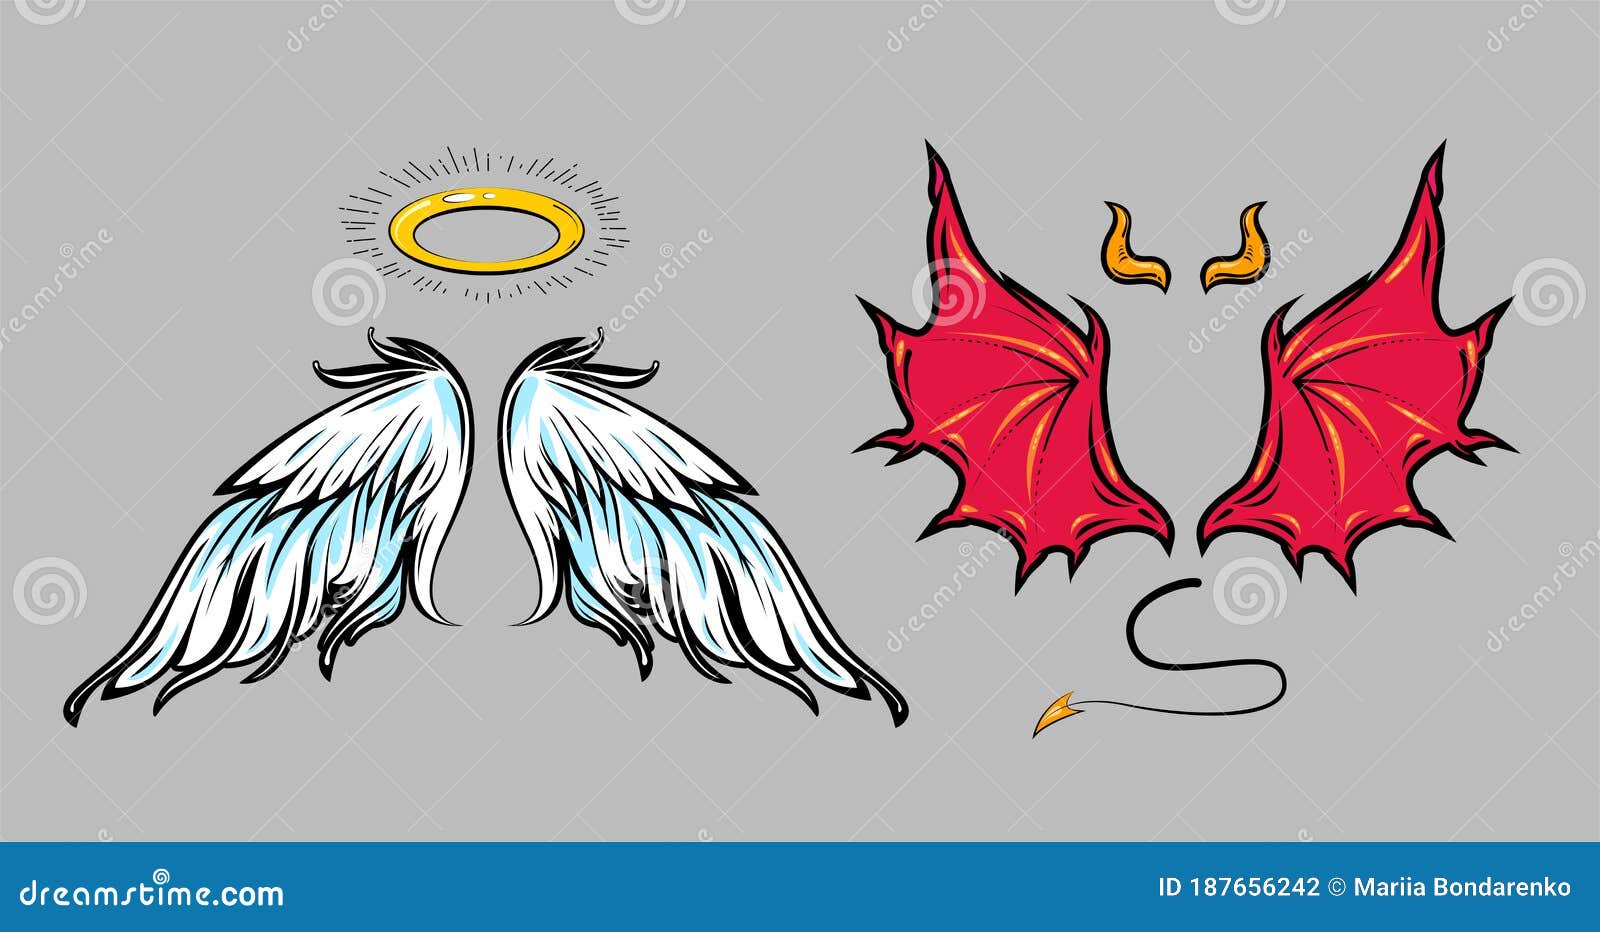 angel and demon cartoon comic style attribute s